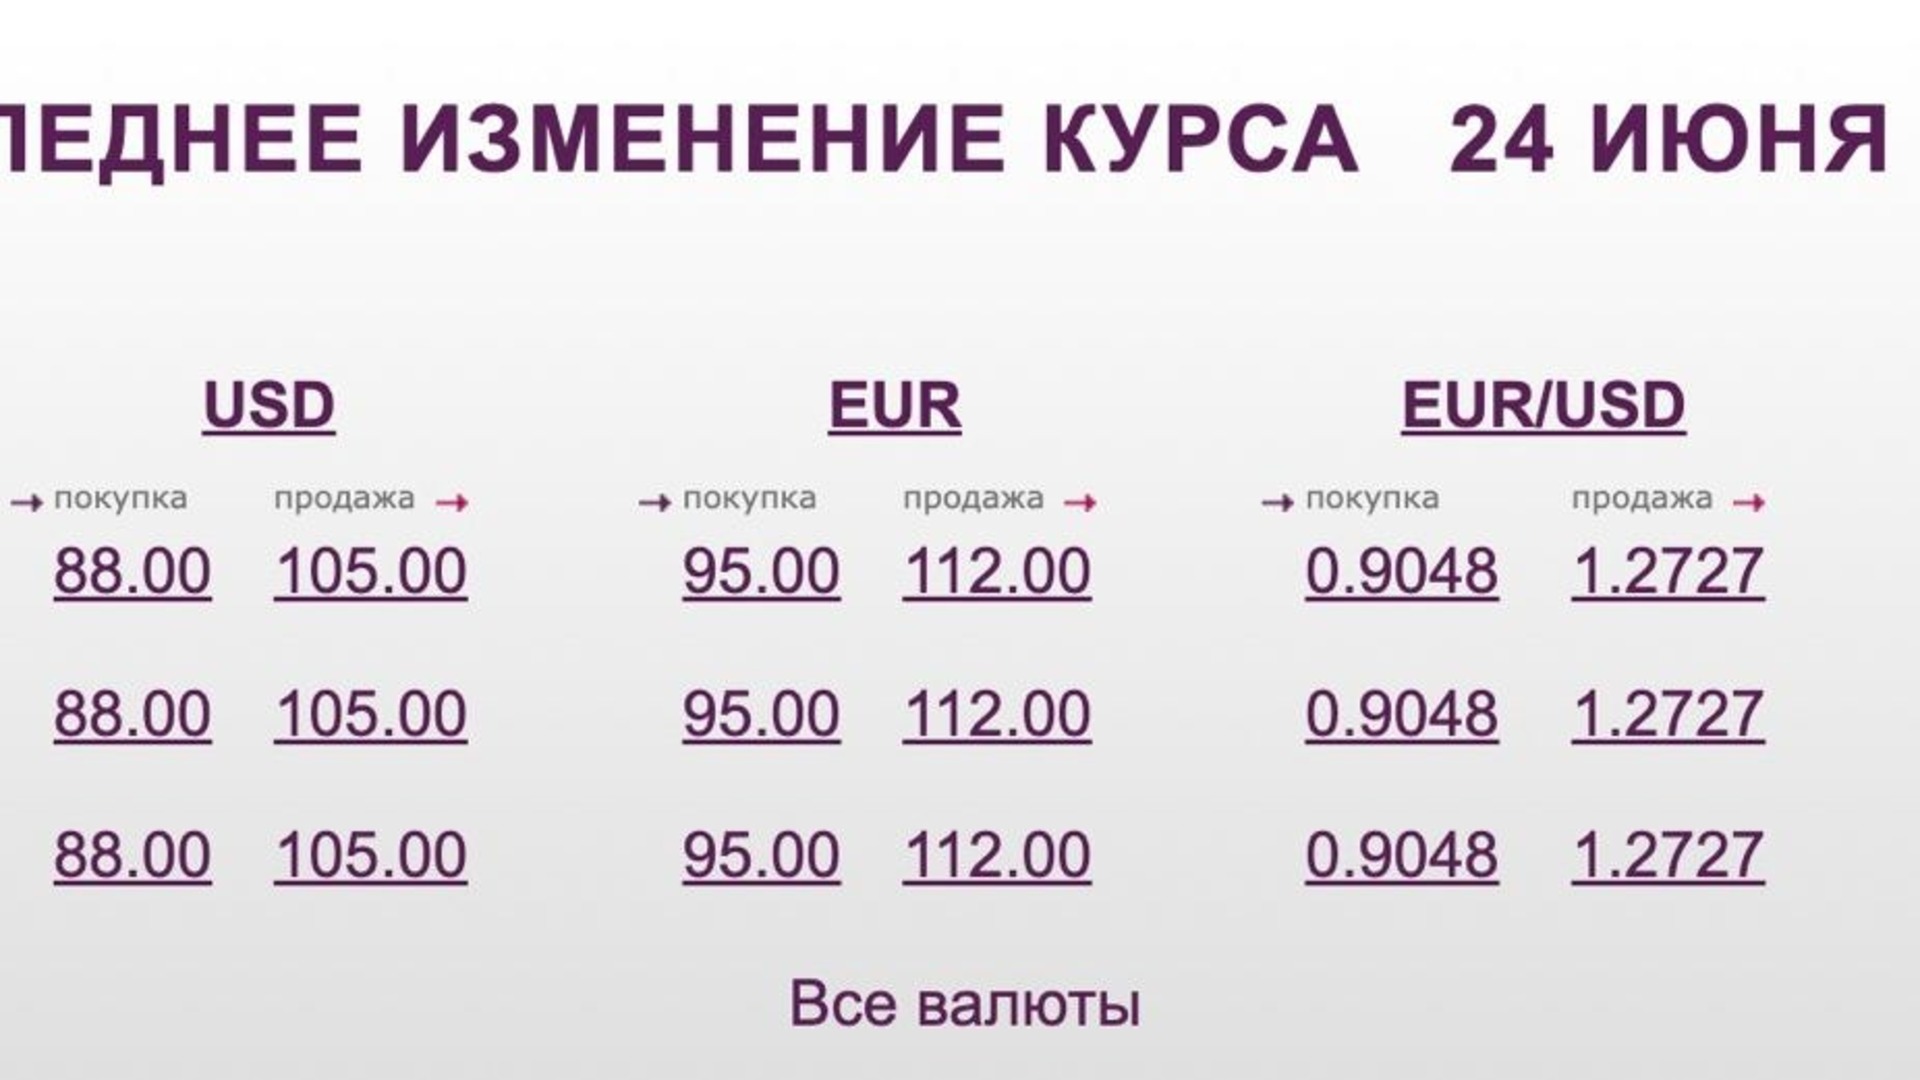 Сумы в евро на сегодня. Рост рубля. Курс валют. Курс валют на сегодня. Курс доллара и евро.